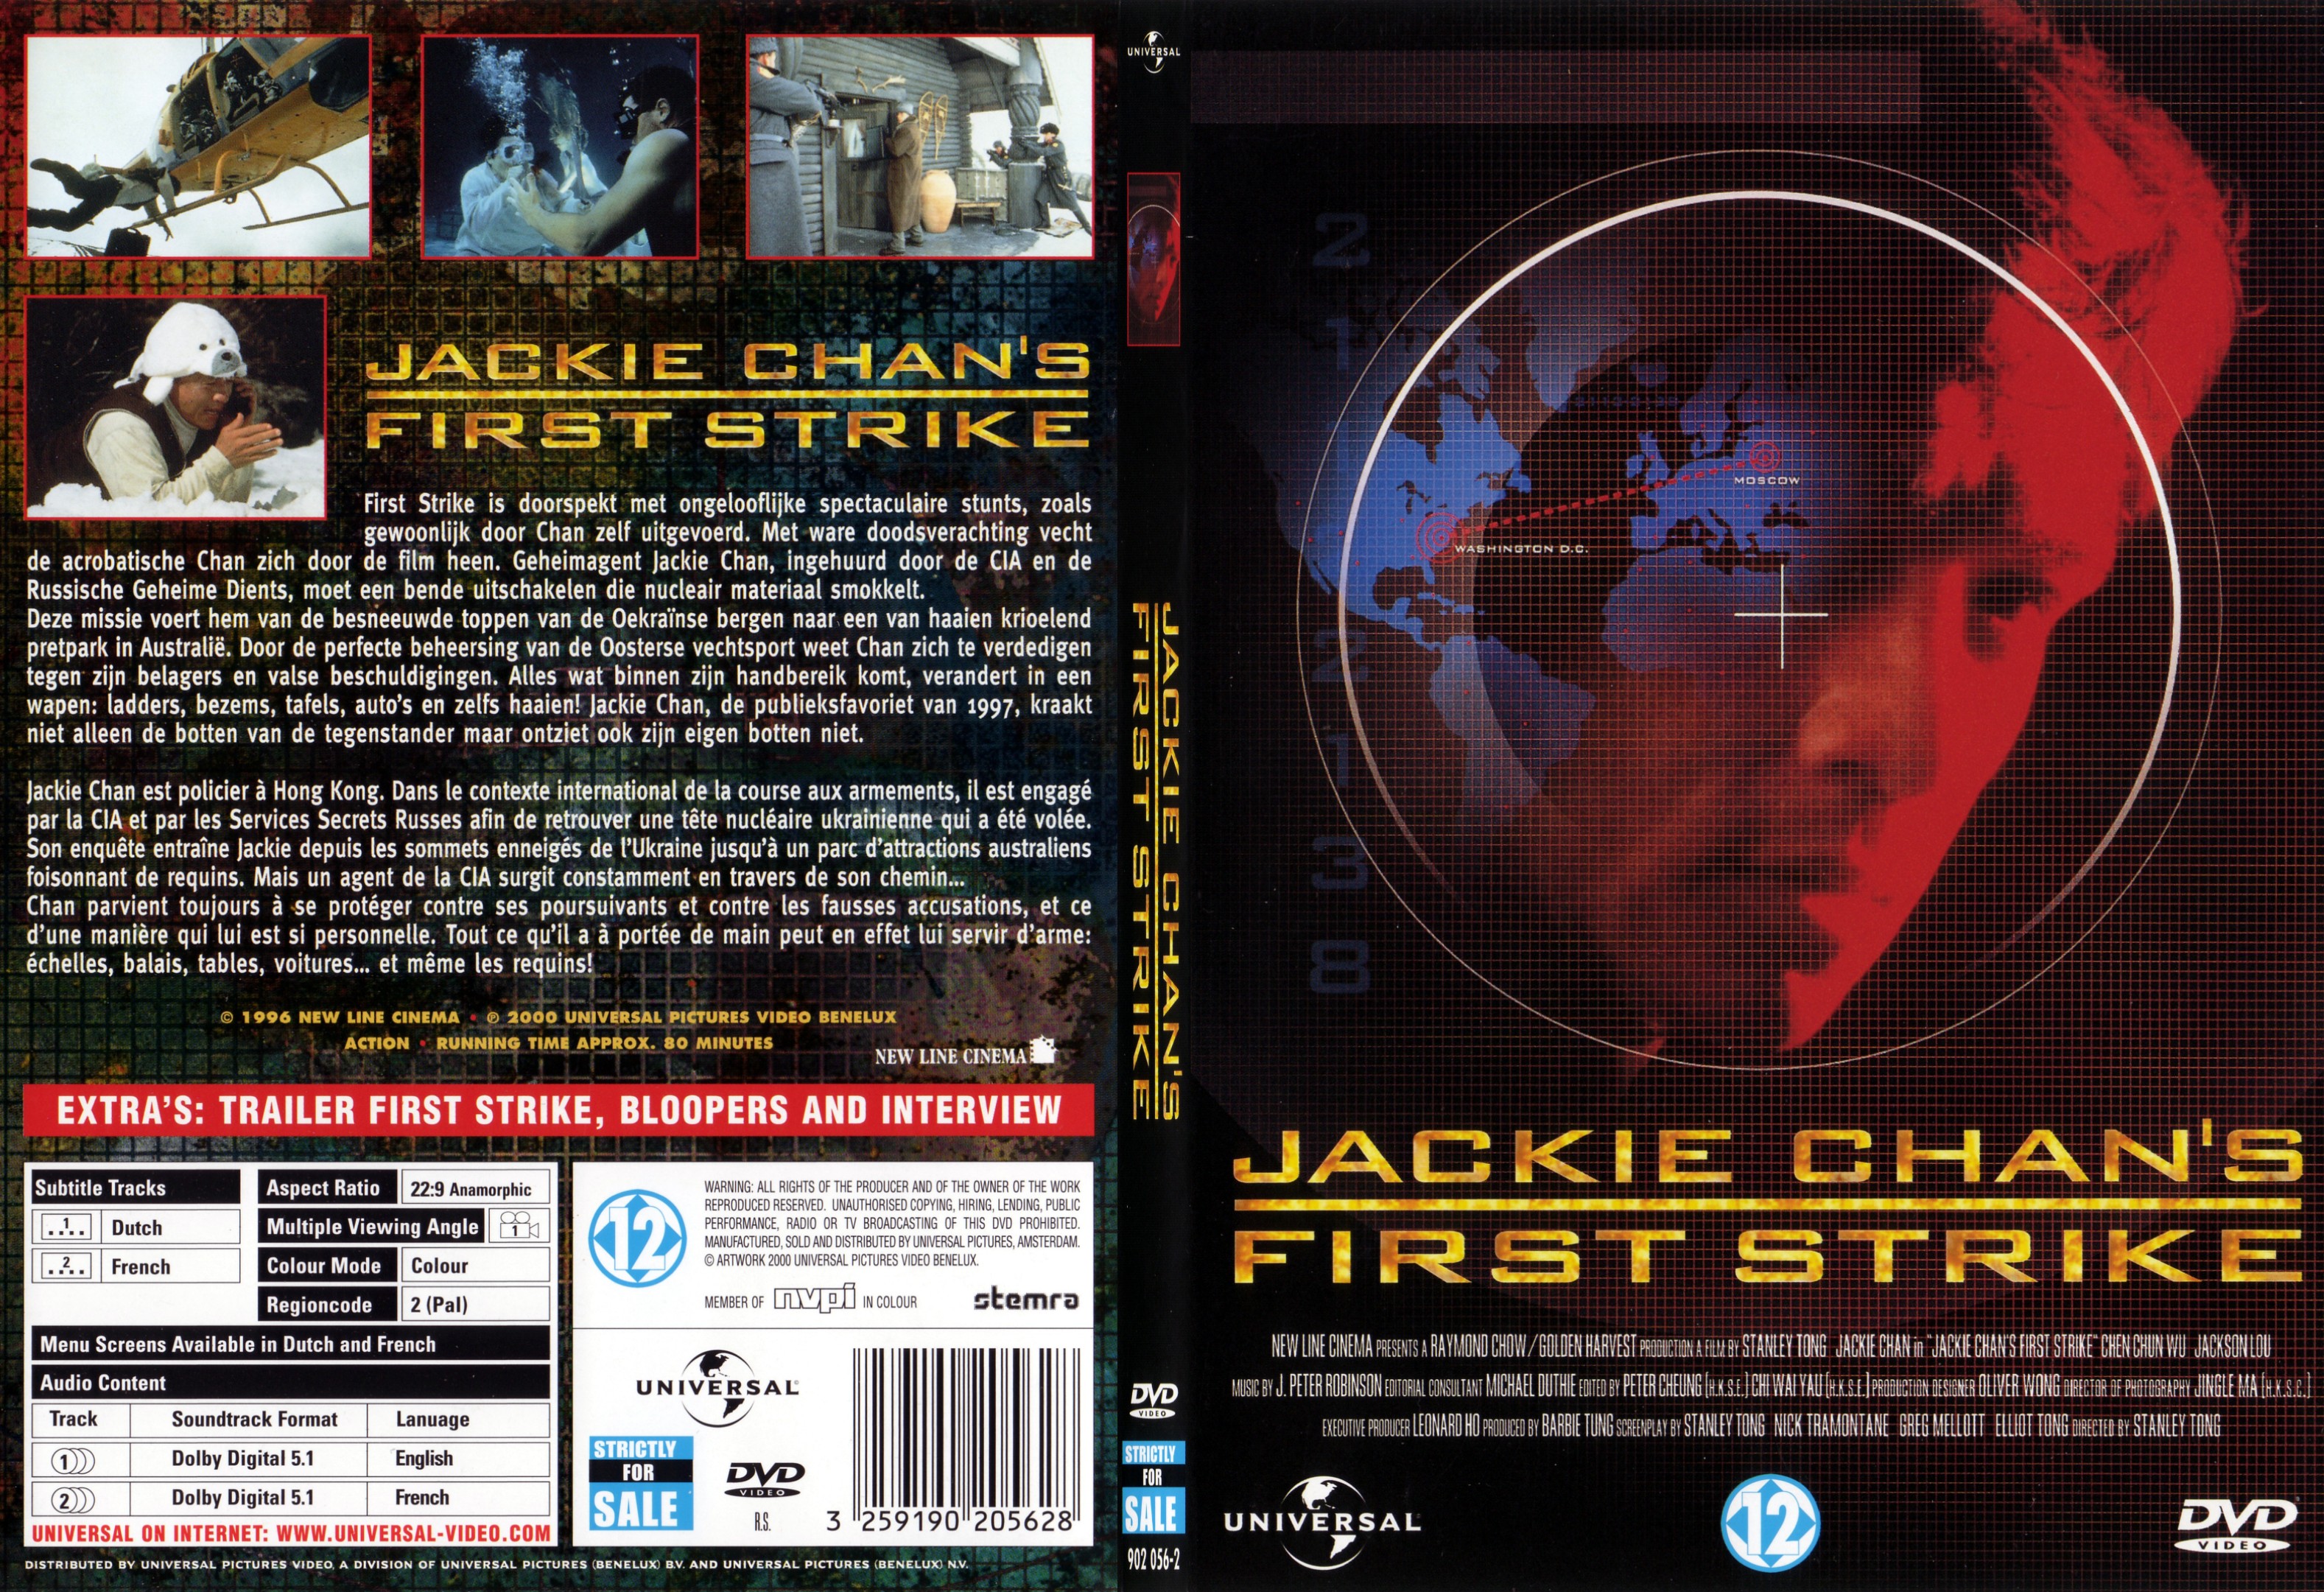 Jaquette DVD First strike - SLIM